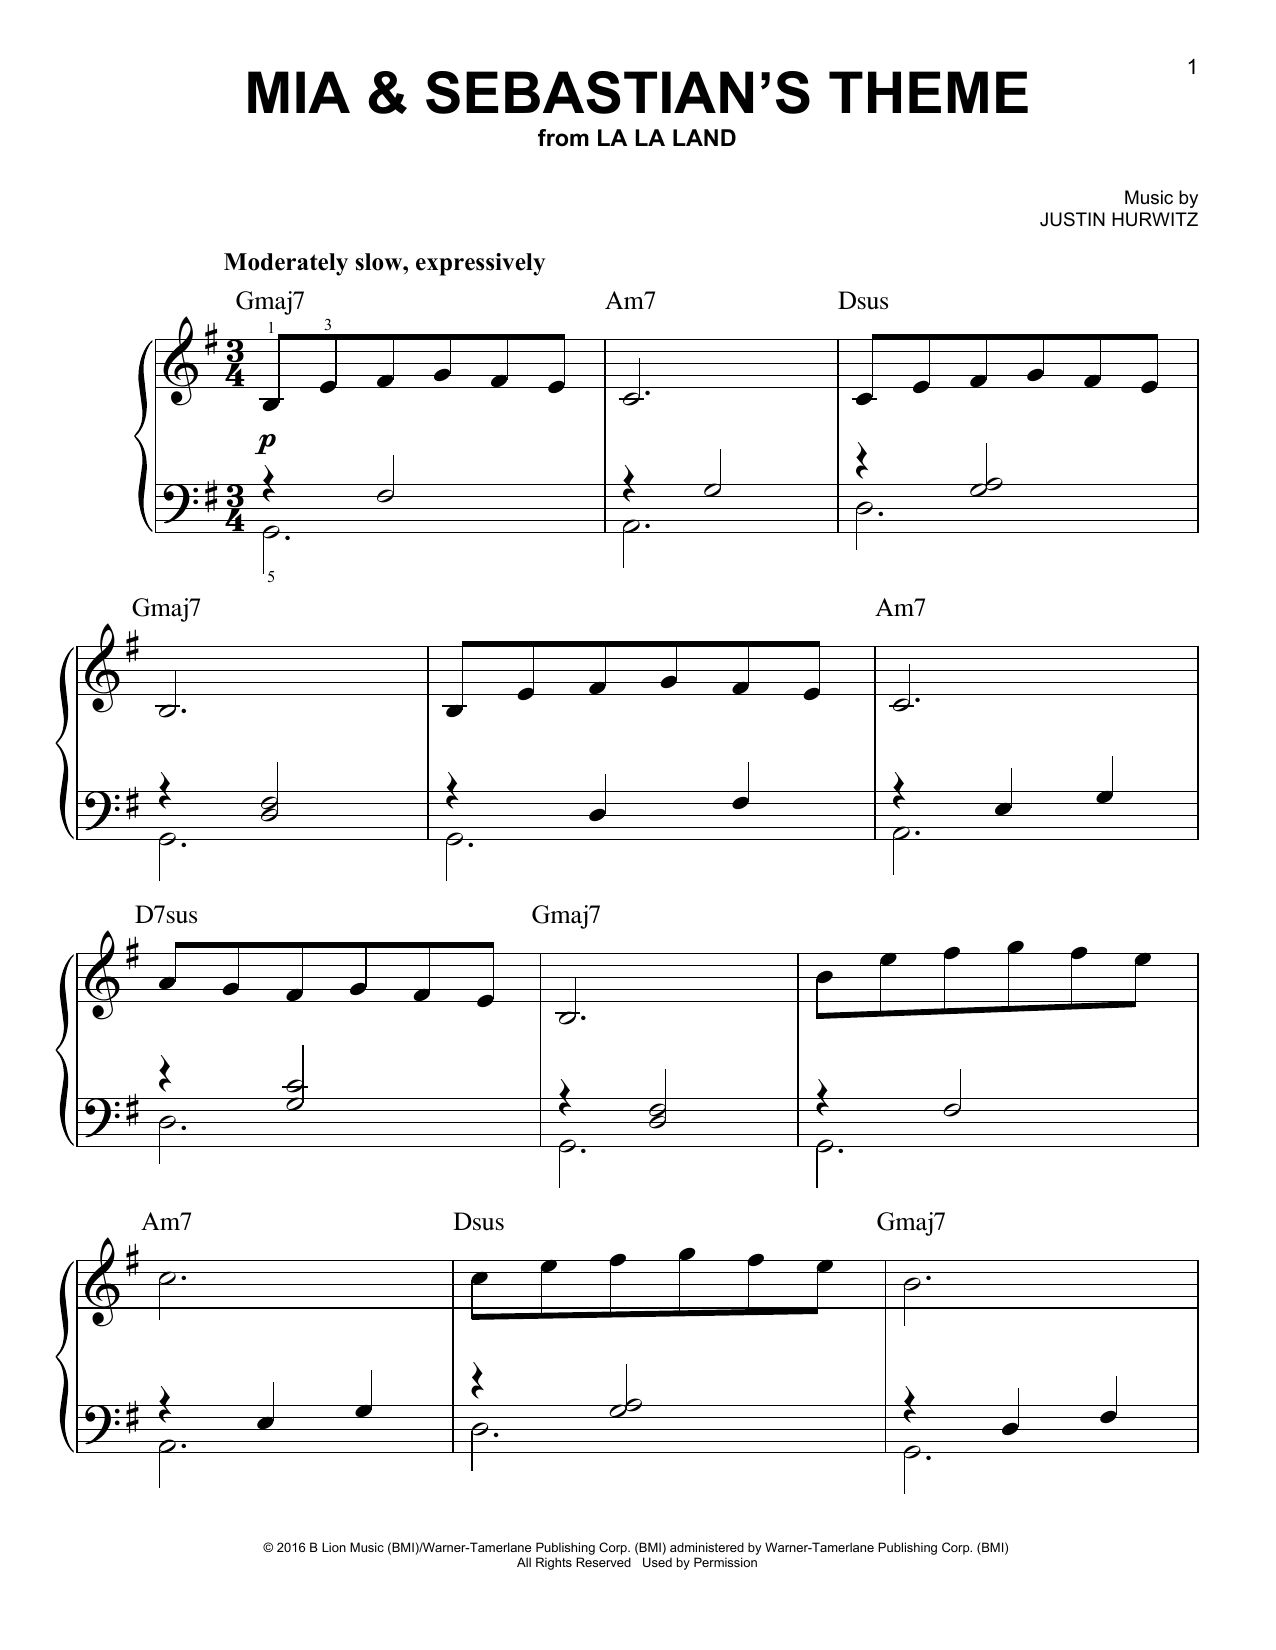 Justin Hurwitz Mia & Sebastian's Theme (from La La Land) Sheet Music Notes & Chords for Cello and Piano - Download or Print PDF